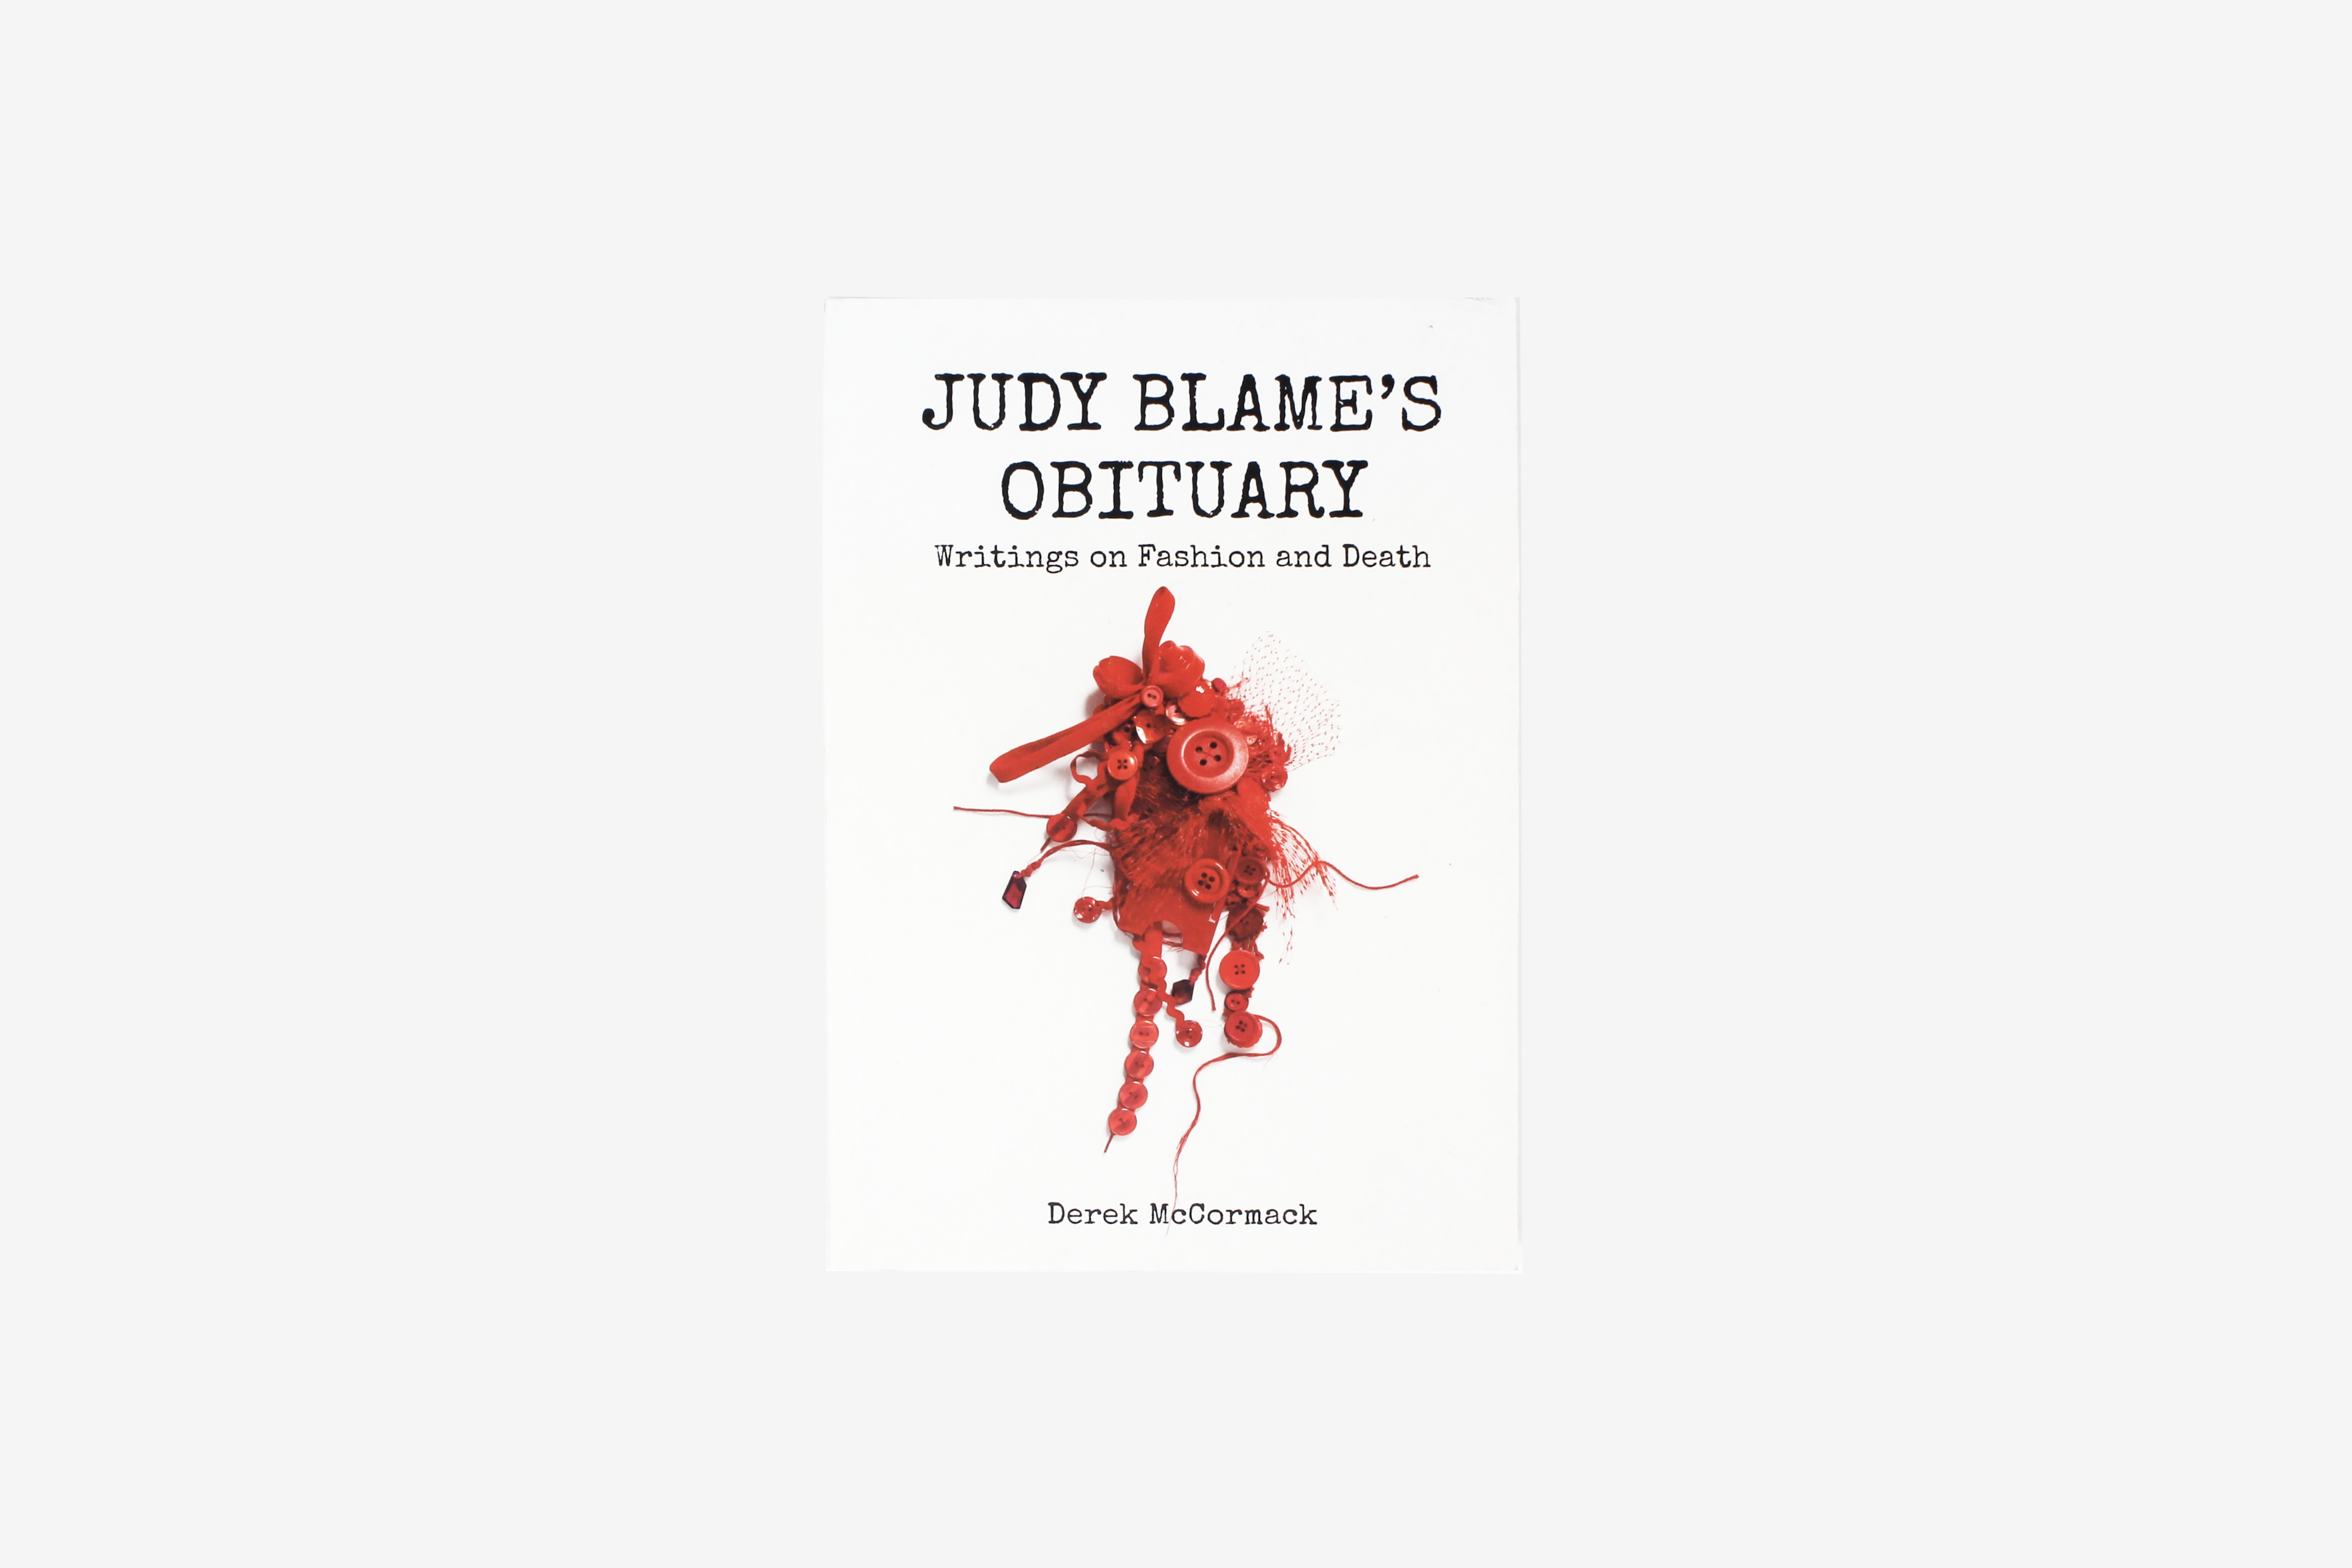 Judy Blame’s Obituary: Writings on Fashion and Death